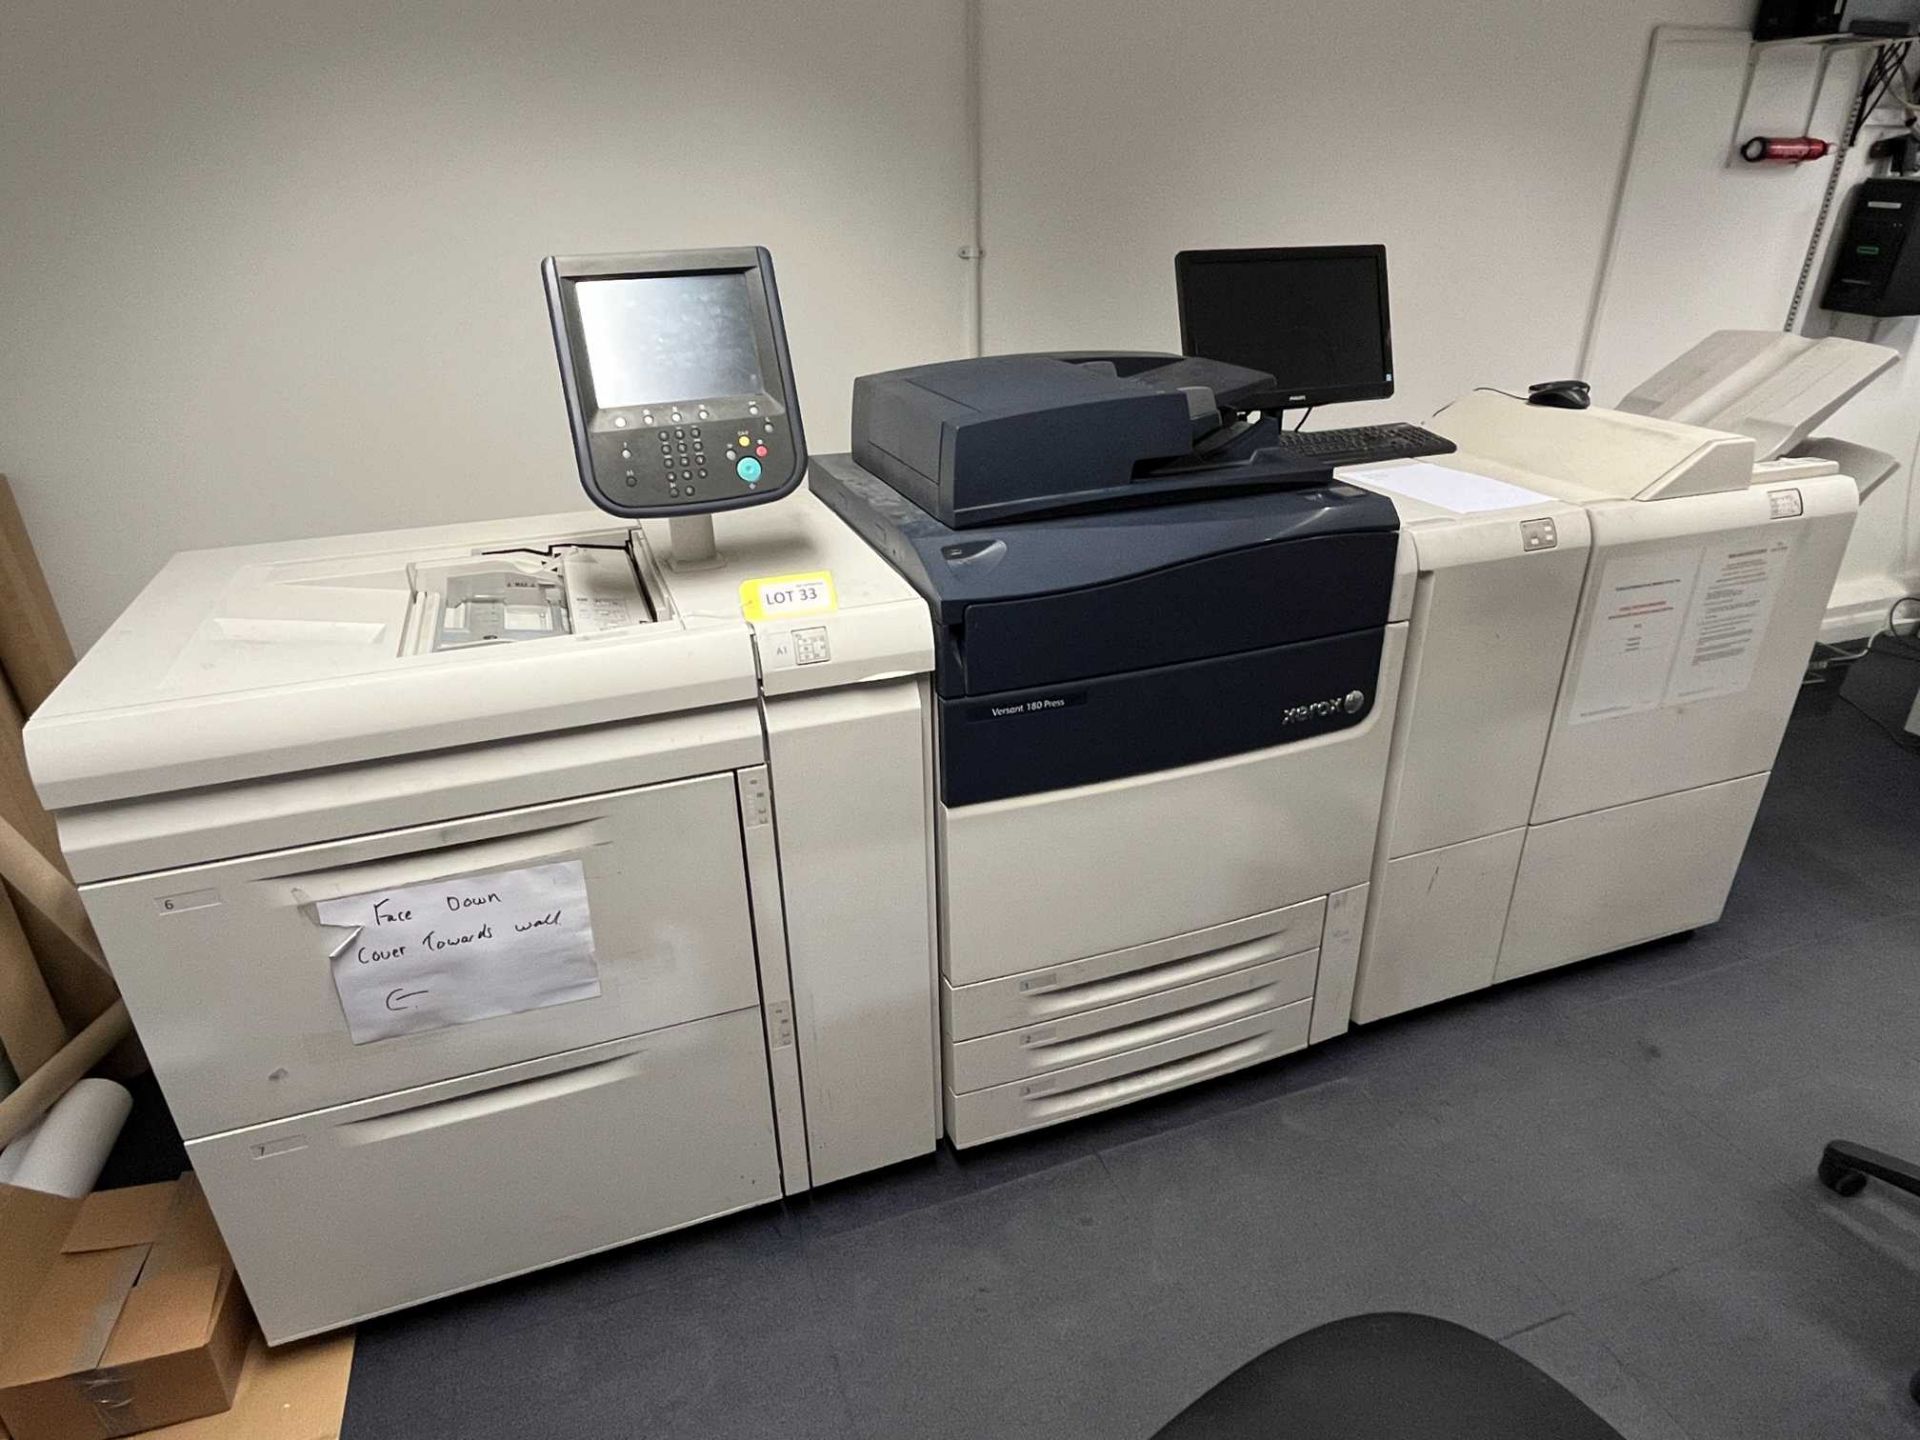 Xerox Versant 180 Press digital press; Serial No: 3131954459 (2019); Impressions: Colour: 1,619,844,